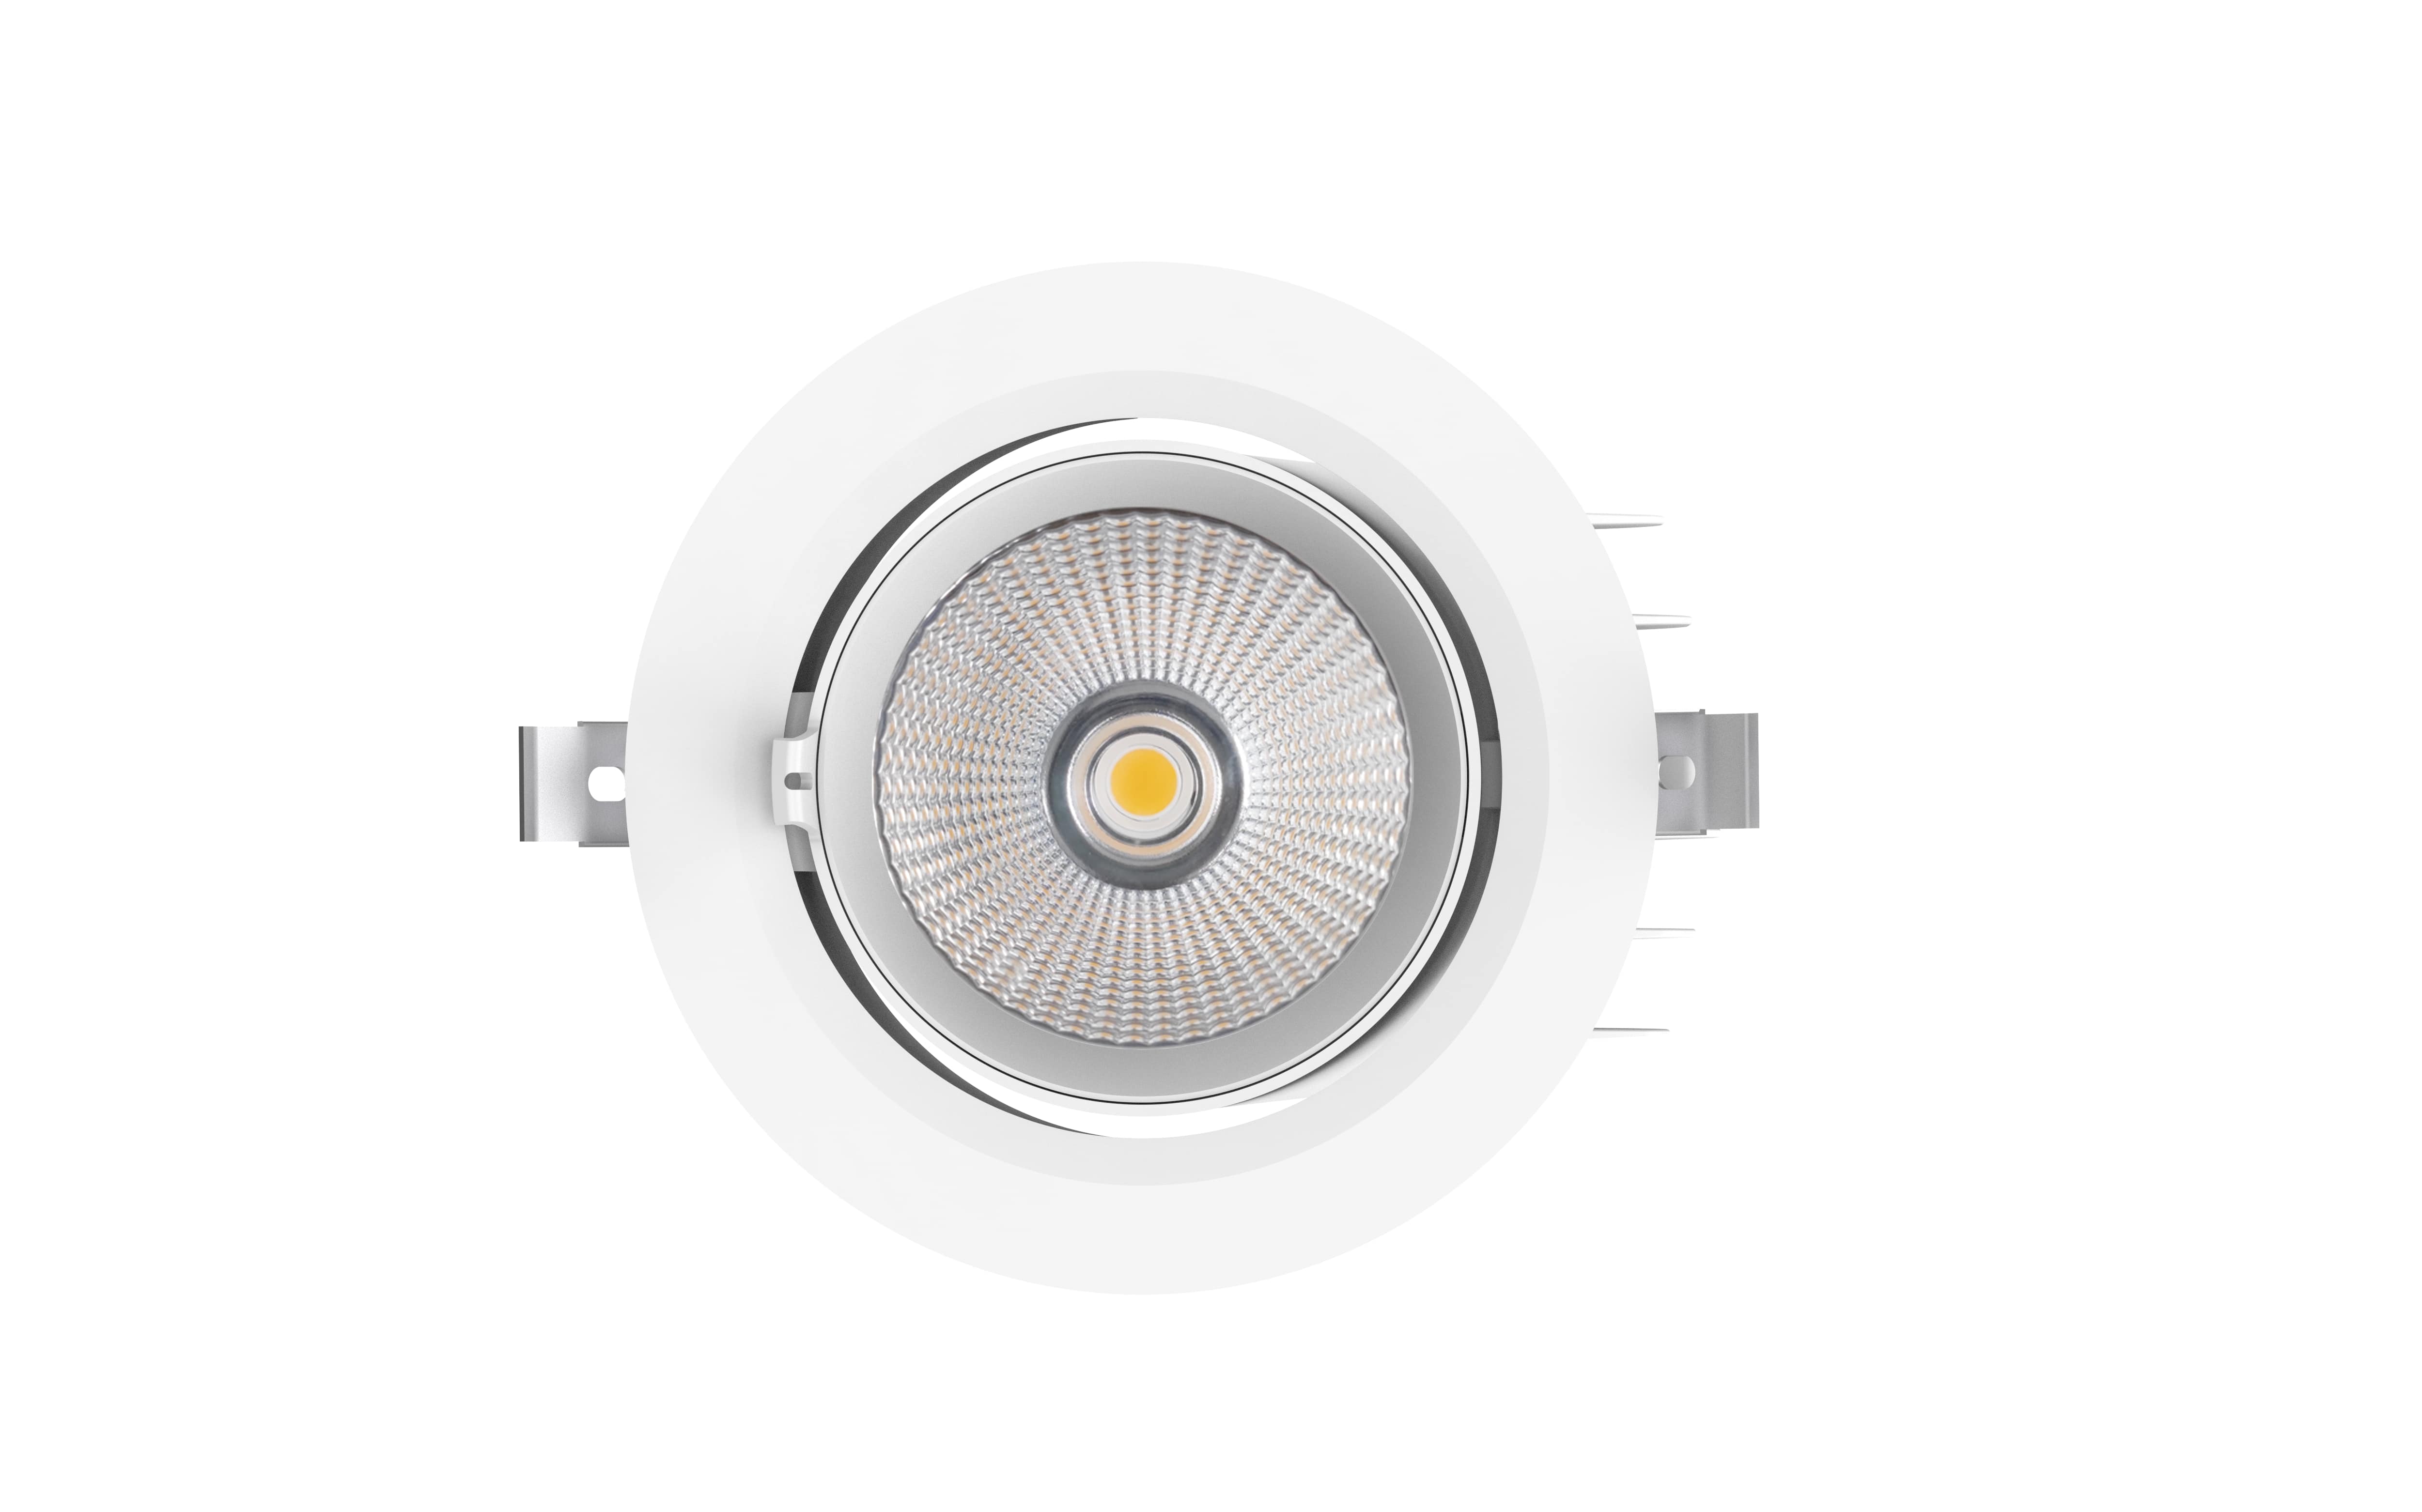 LED-Downlight MULTI 2 20-40 W, 830, 4.800 lm, 36°, PowerSwitch, 180x147 mm, Loch 165-170 mm